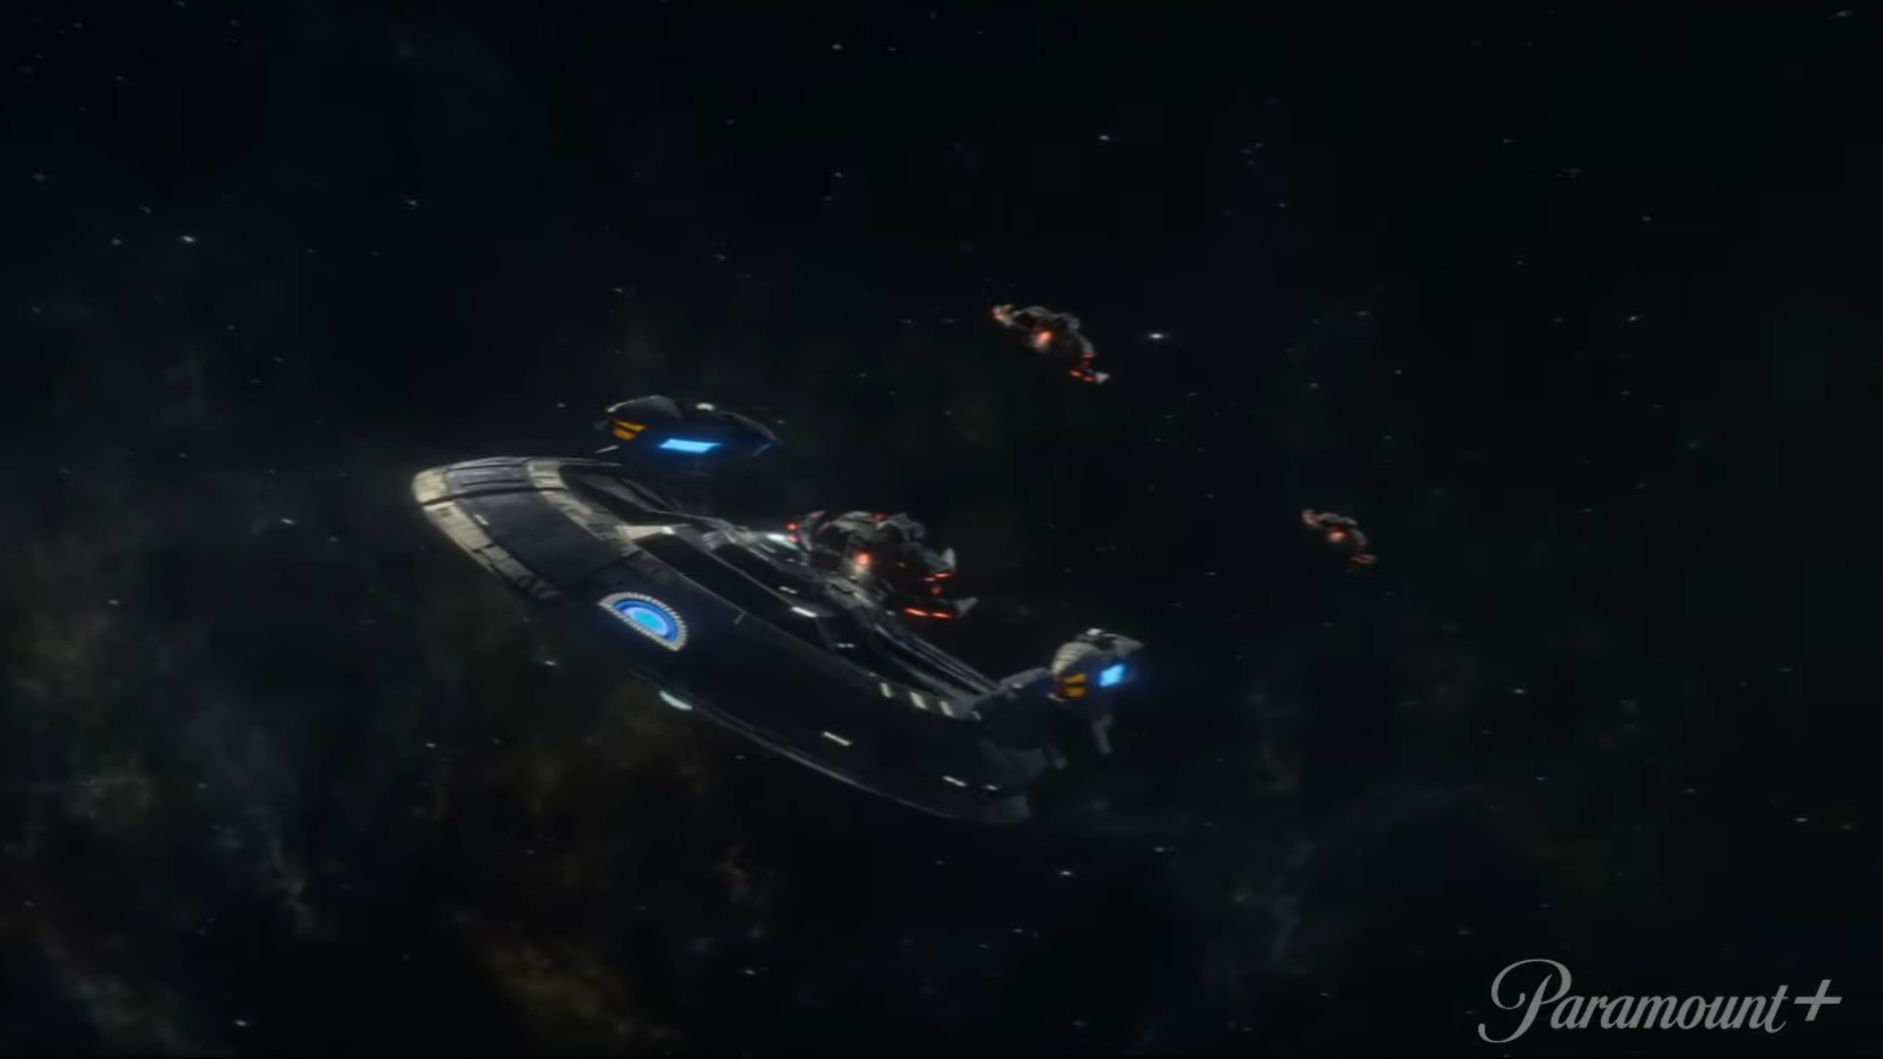 Star Trek Picard: Trailer For Final Season Shows TNG Crew Reunited